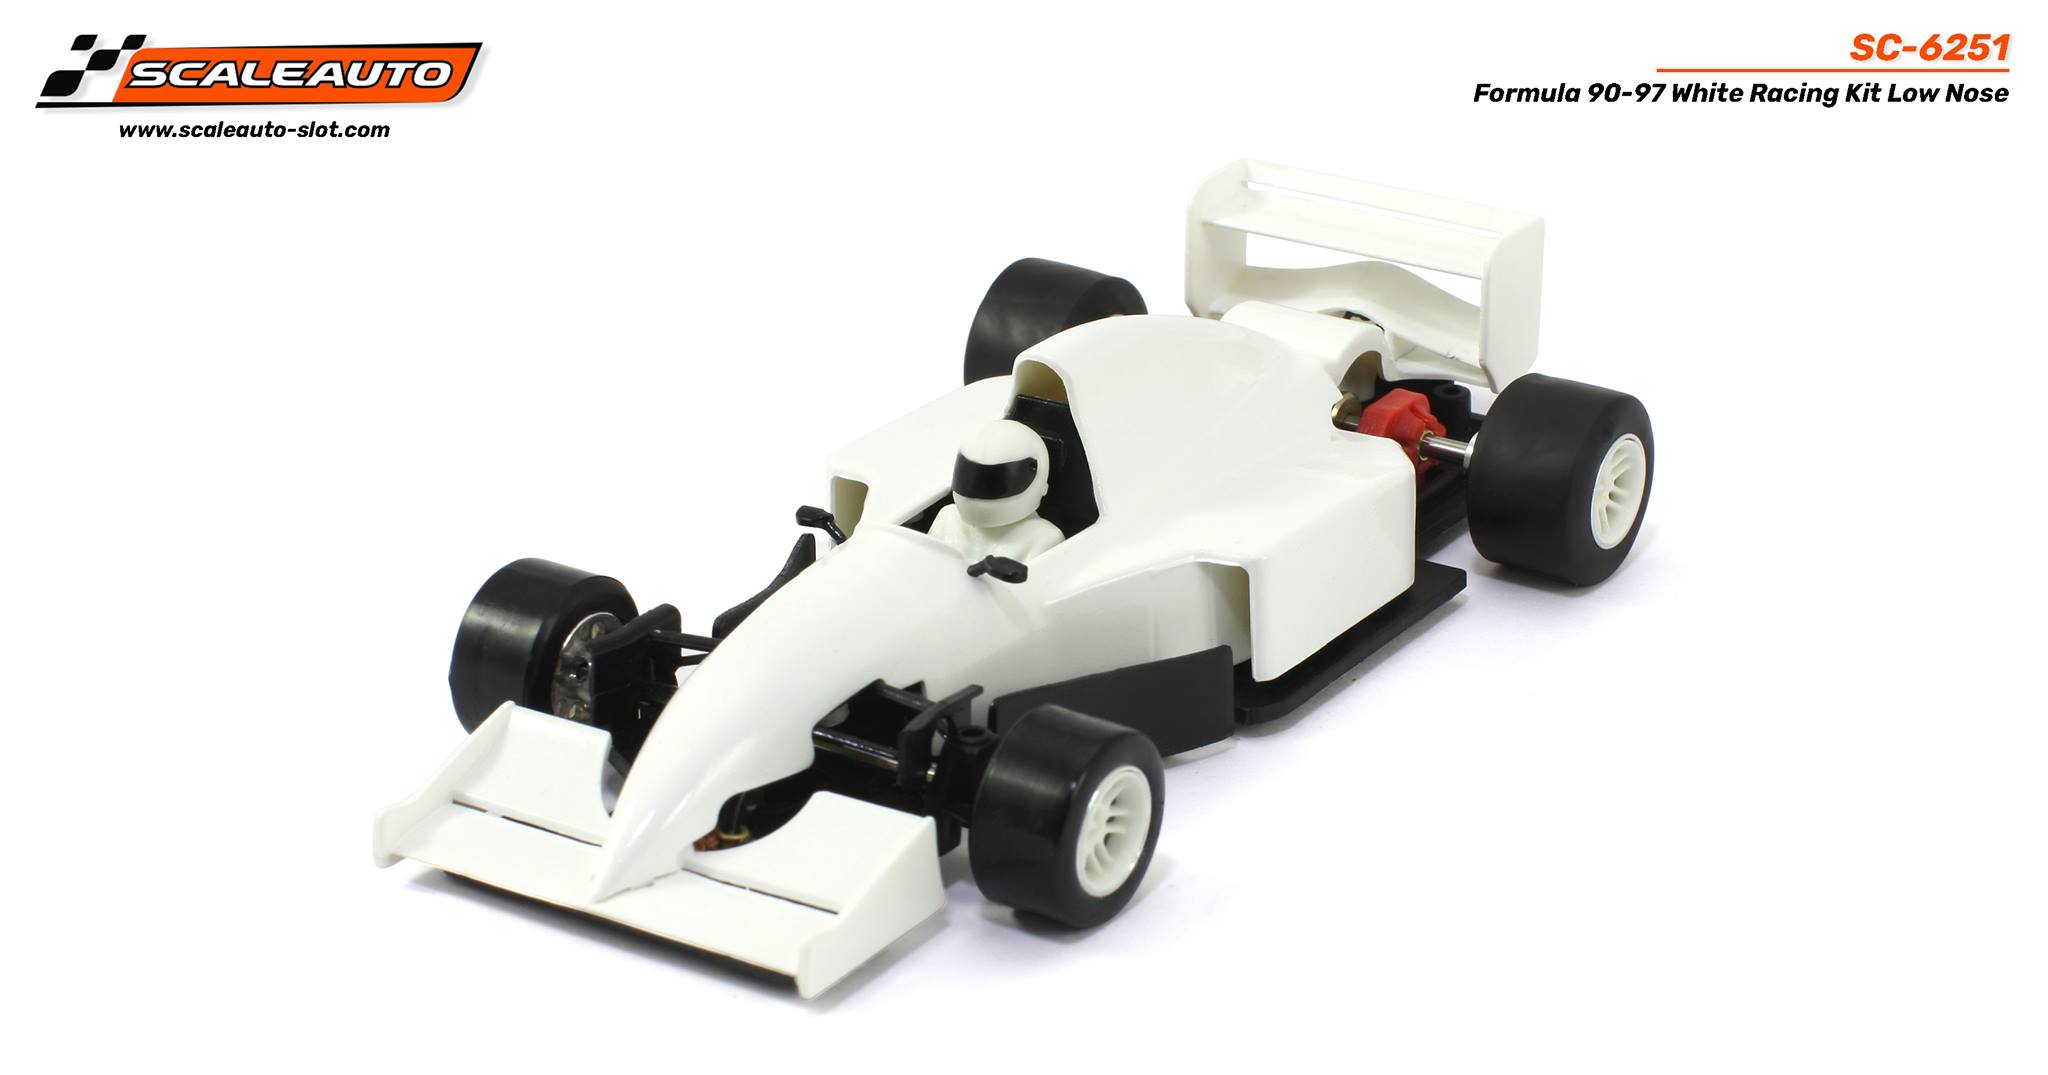 SC-6251 Formula 90-97 Low Nose White Kit Car ( pre order )